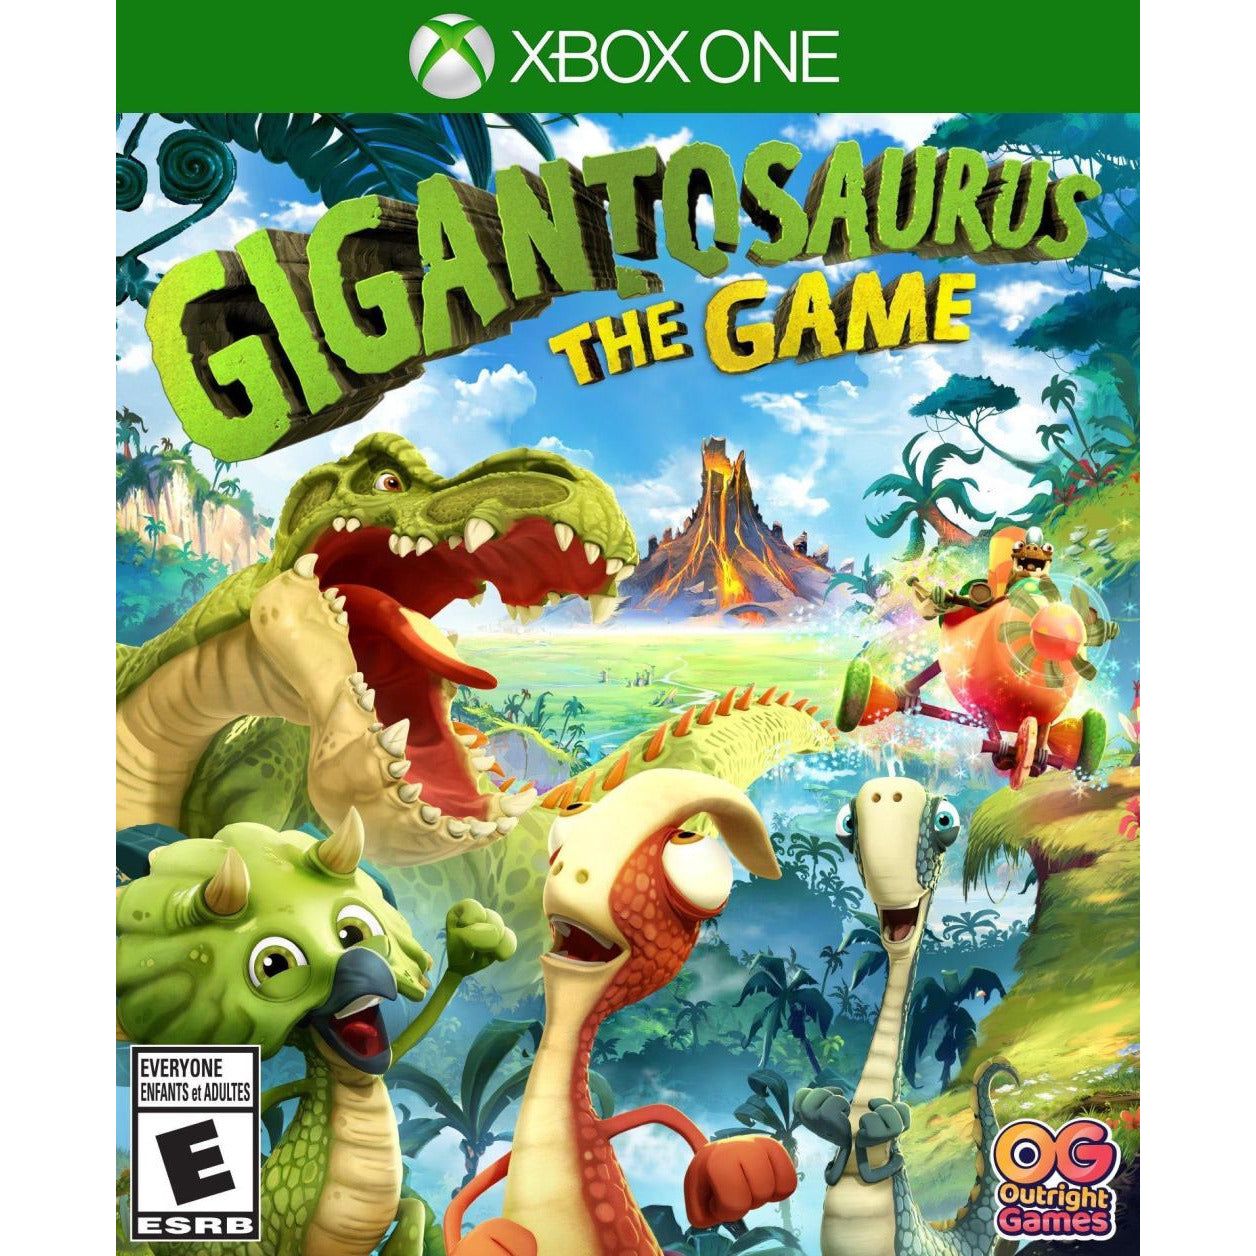 XBOX ONE - Gigantosaurus The Game